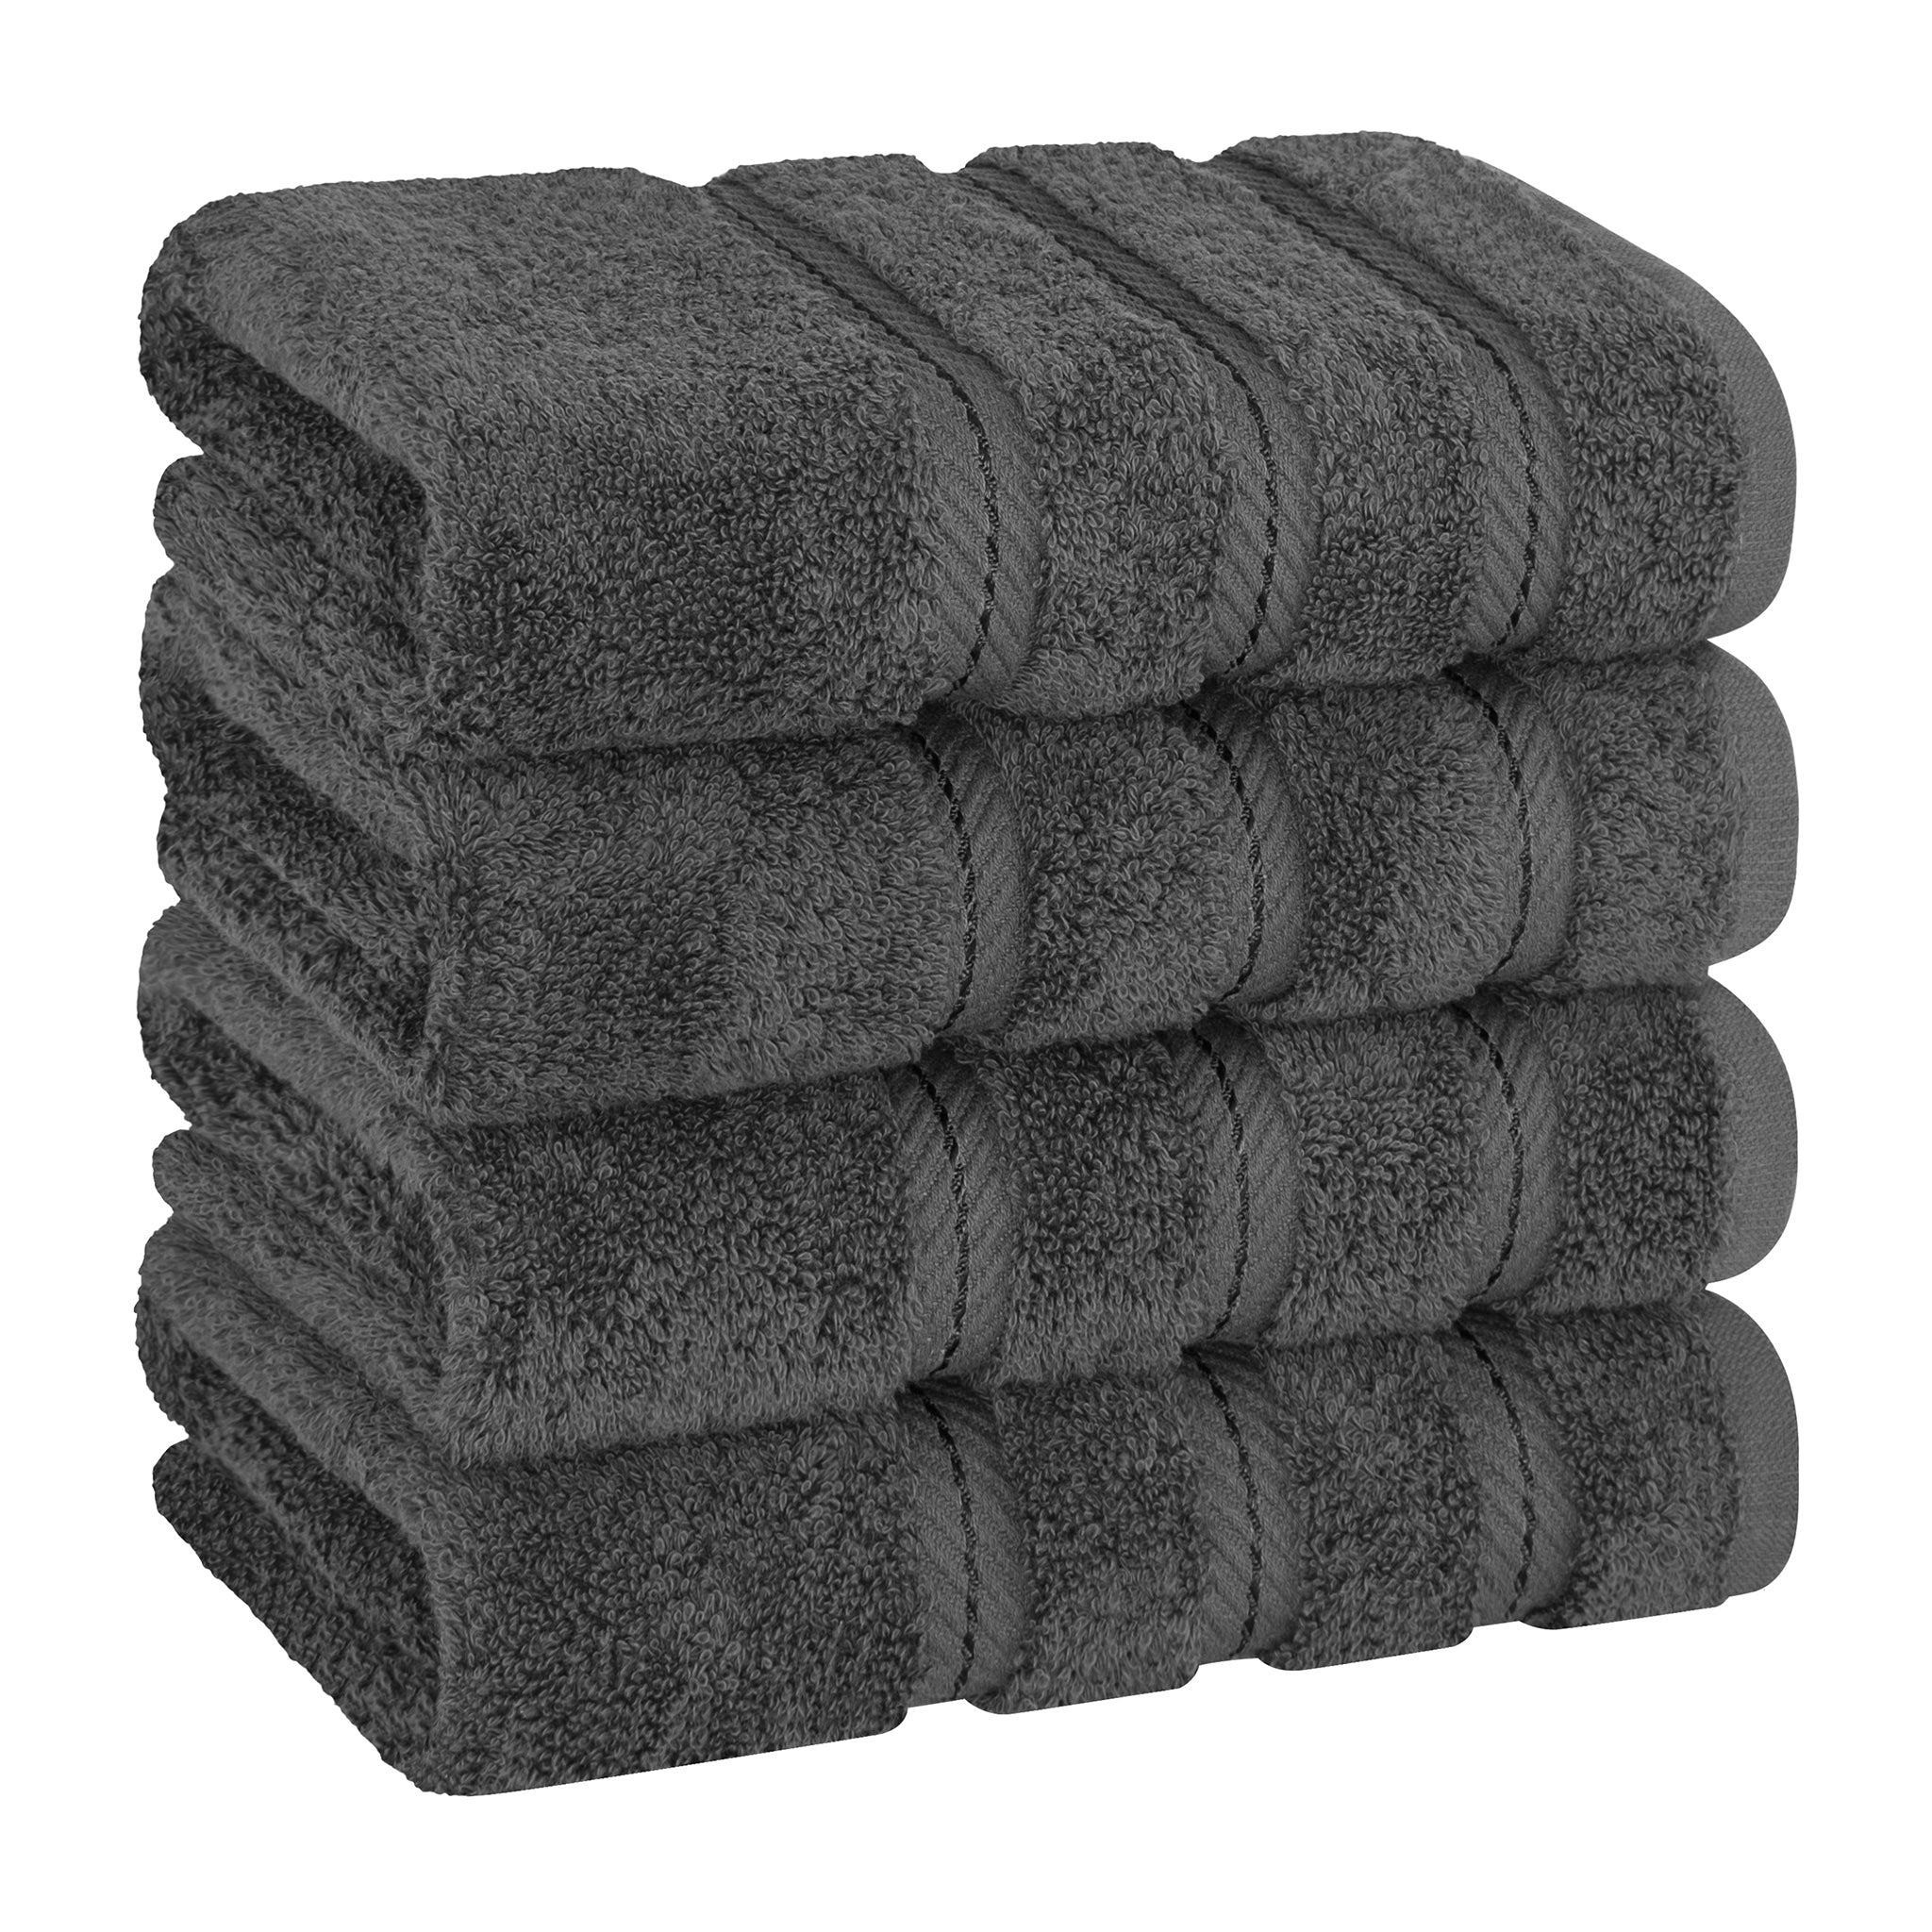 Lexi Hand Towel - Hotel Quality Towels - The Turkish Towel Company